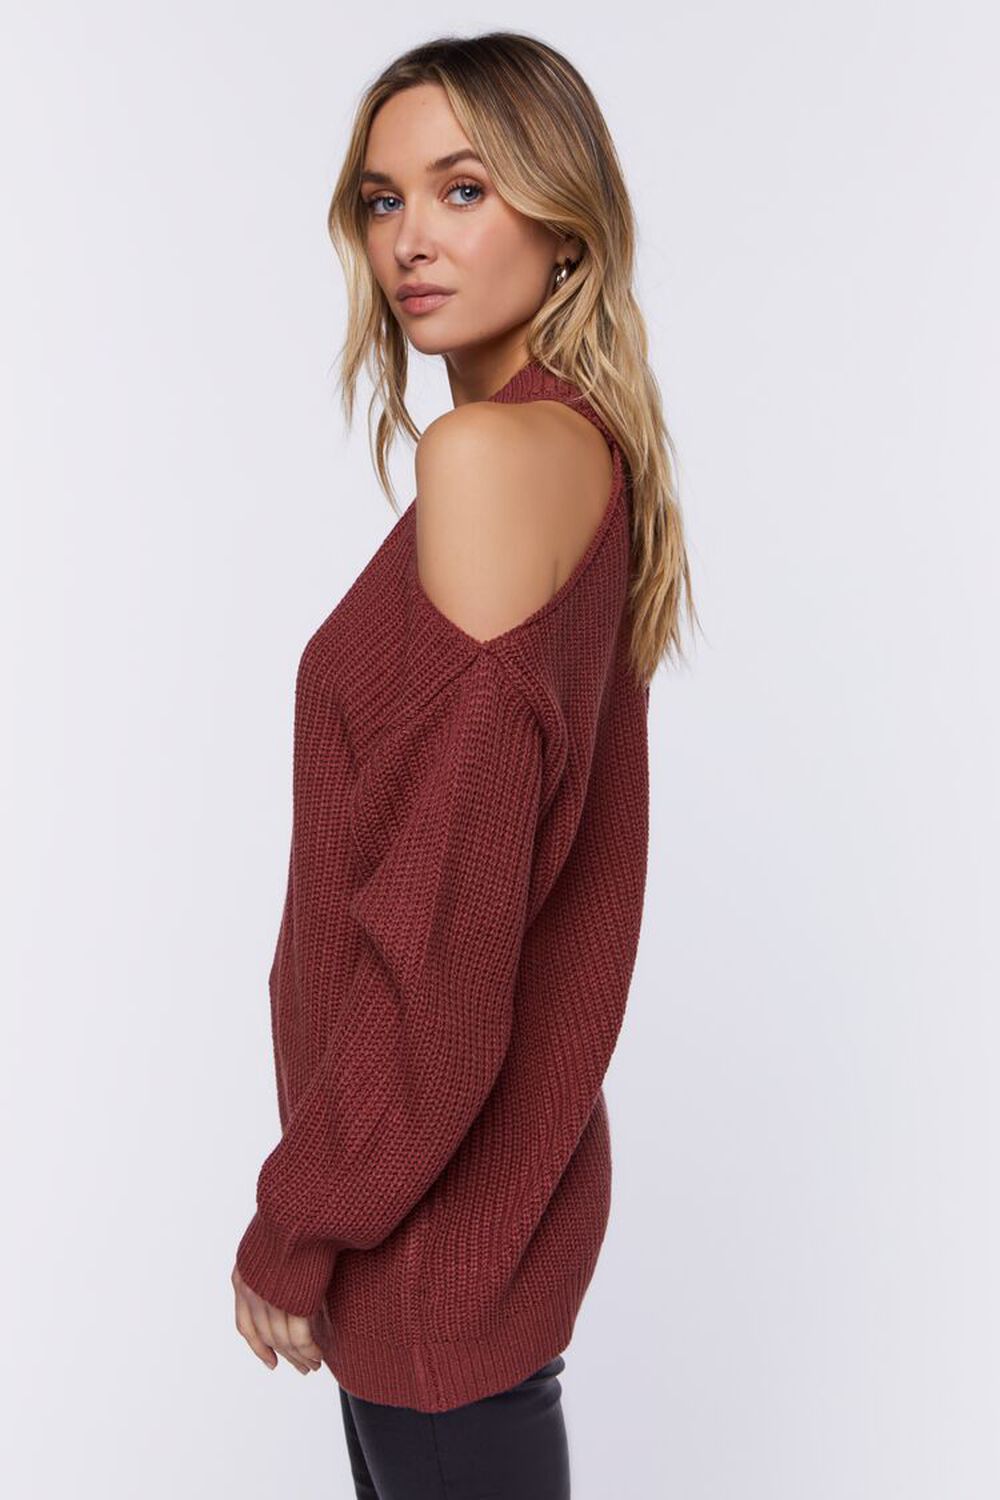 BRICK Asymmetrical Open-Shoulder Sweater, image 2